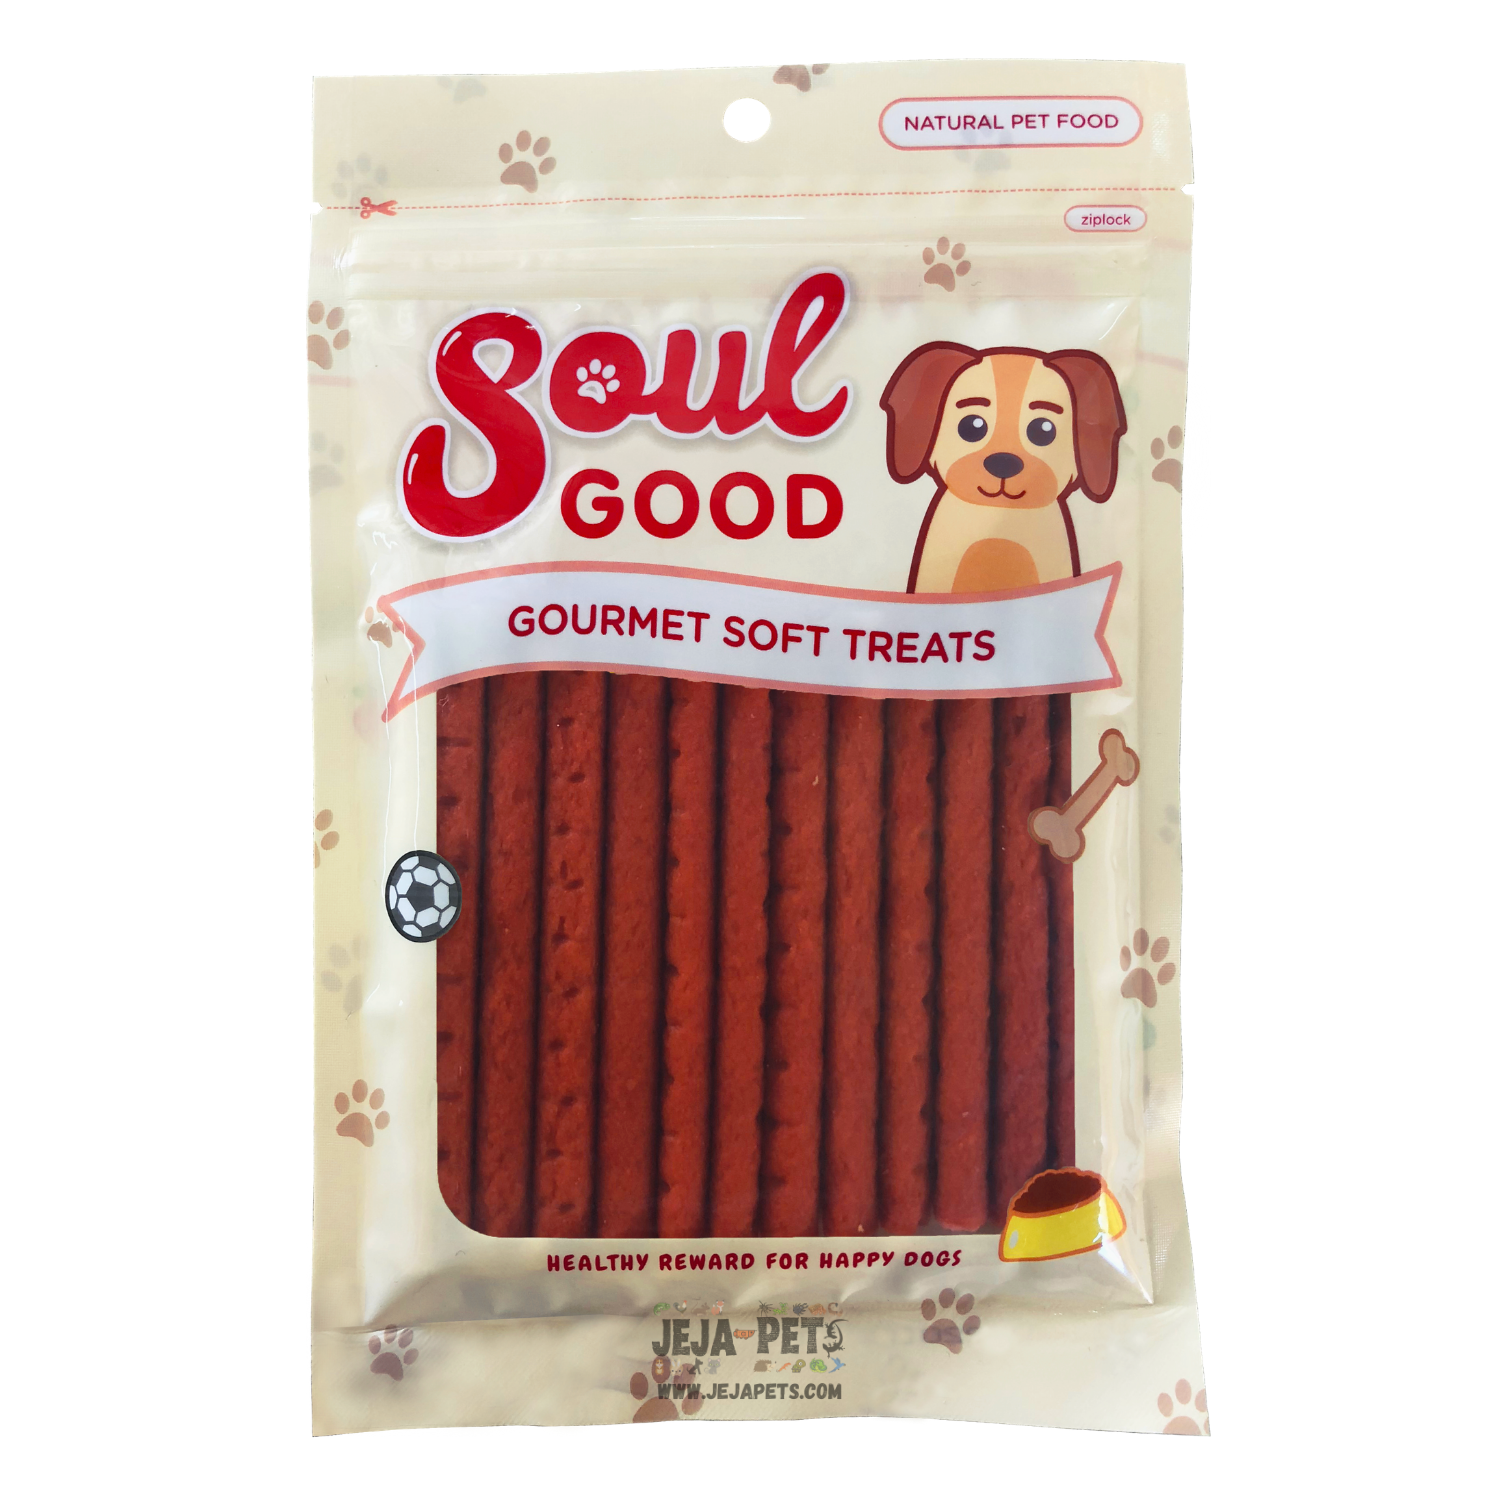 [DISCONTINUED] Soul Good Gourmet Soft Treats (Carrot) - 100g